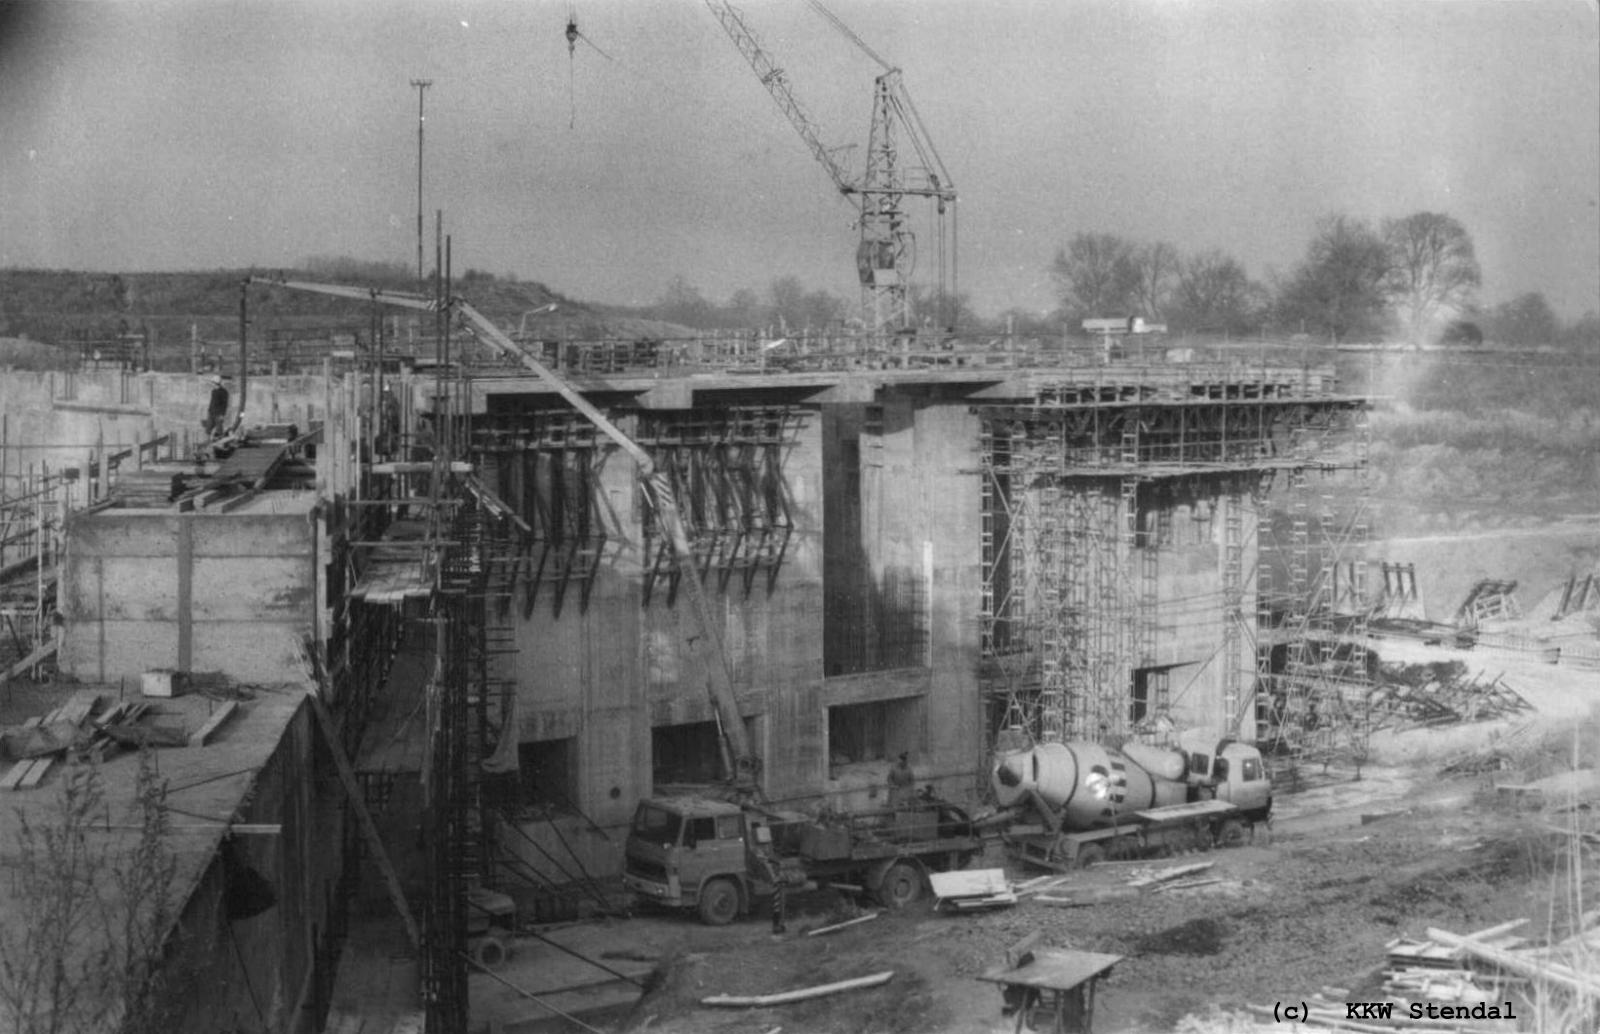  AKW Stendal, Baustelle 1988, Einlaufbauwerk 